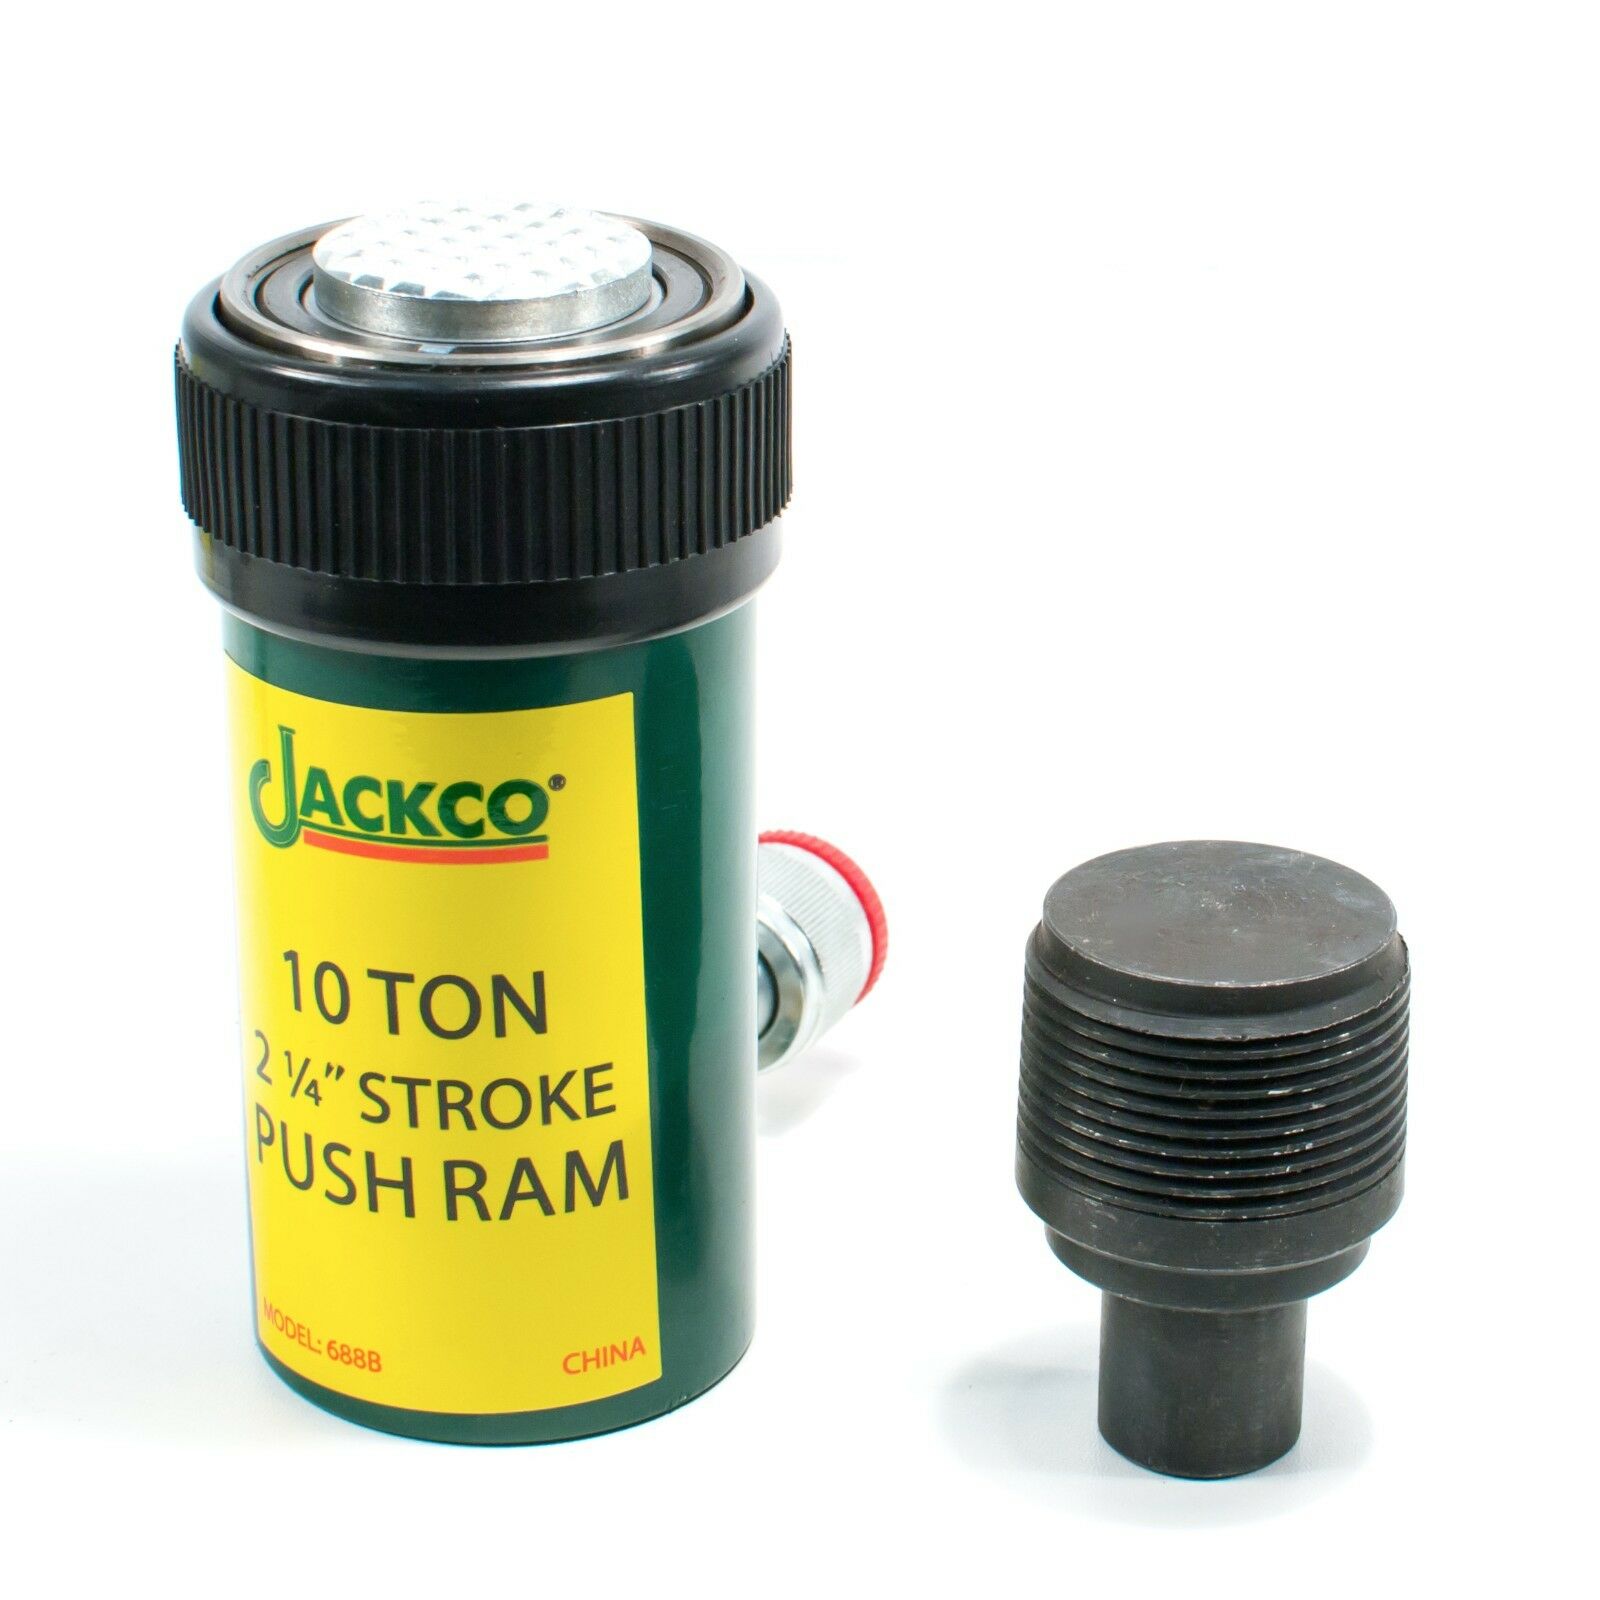 Jackco 10 Ton 2-1/4" Stroke Hydraulic Ram - Tool Guy Republic